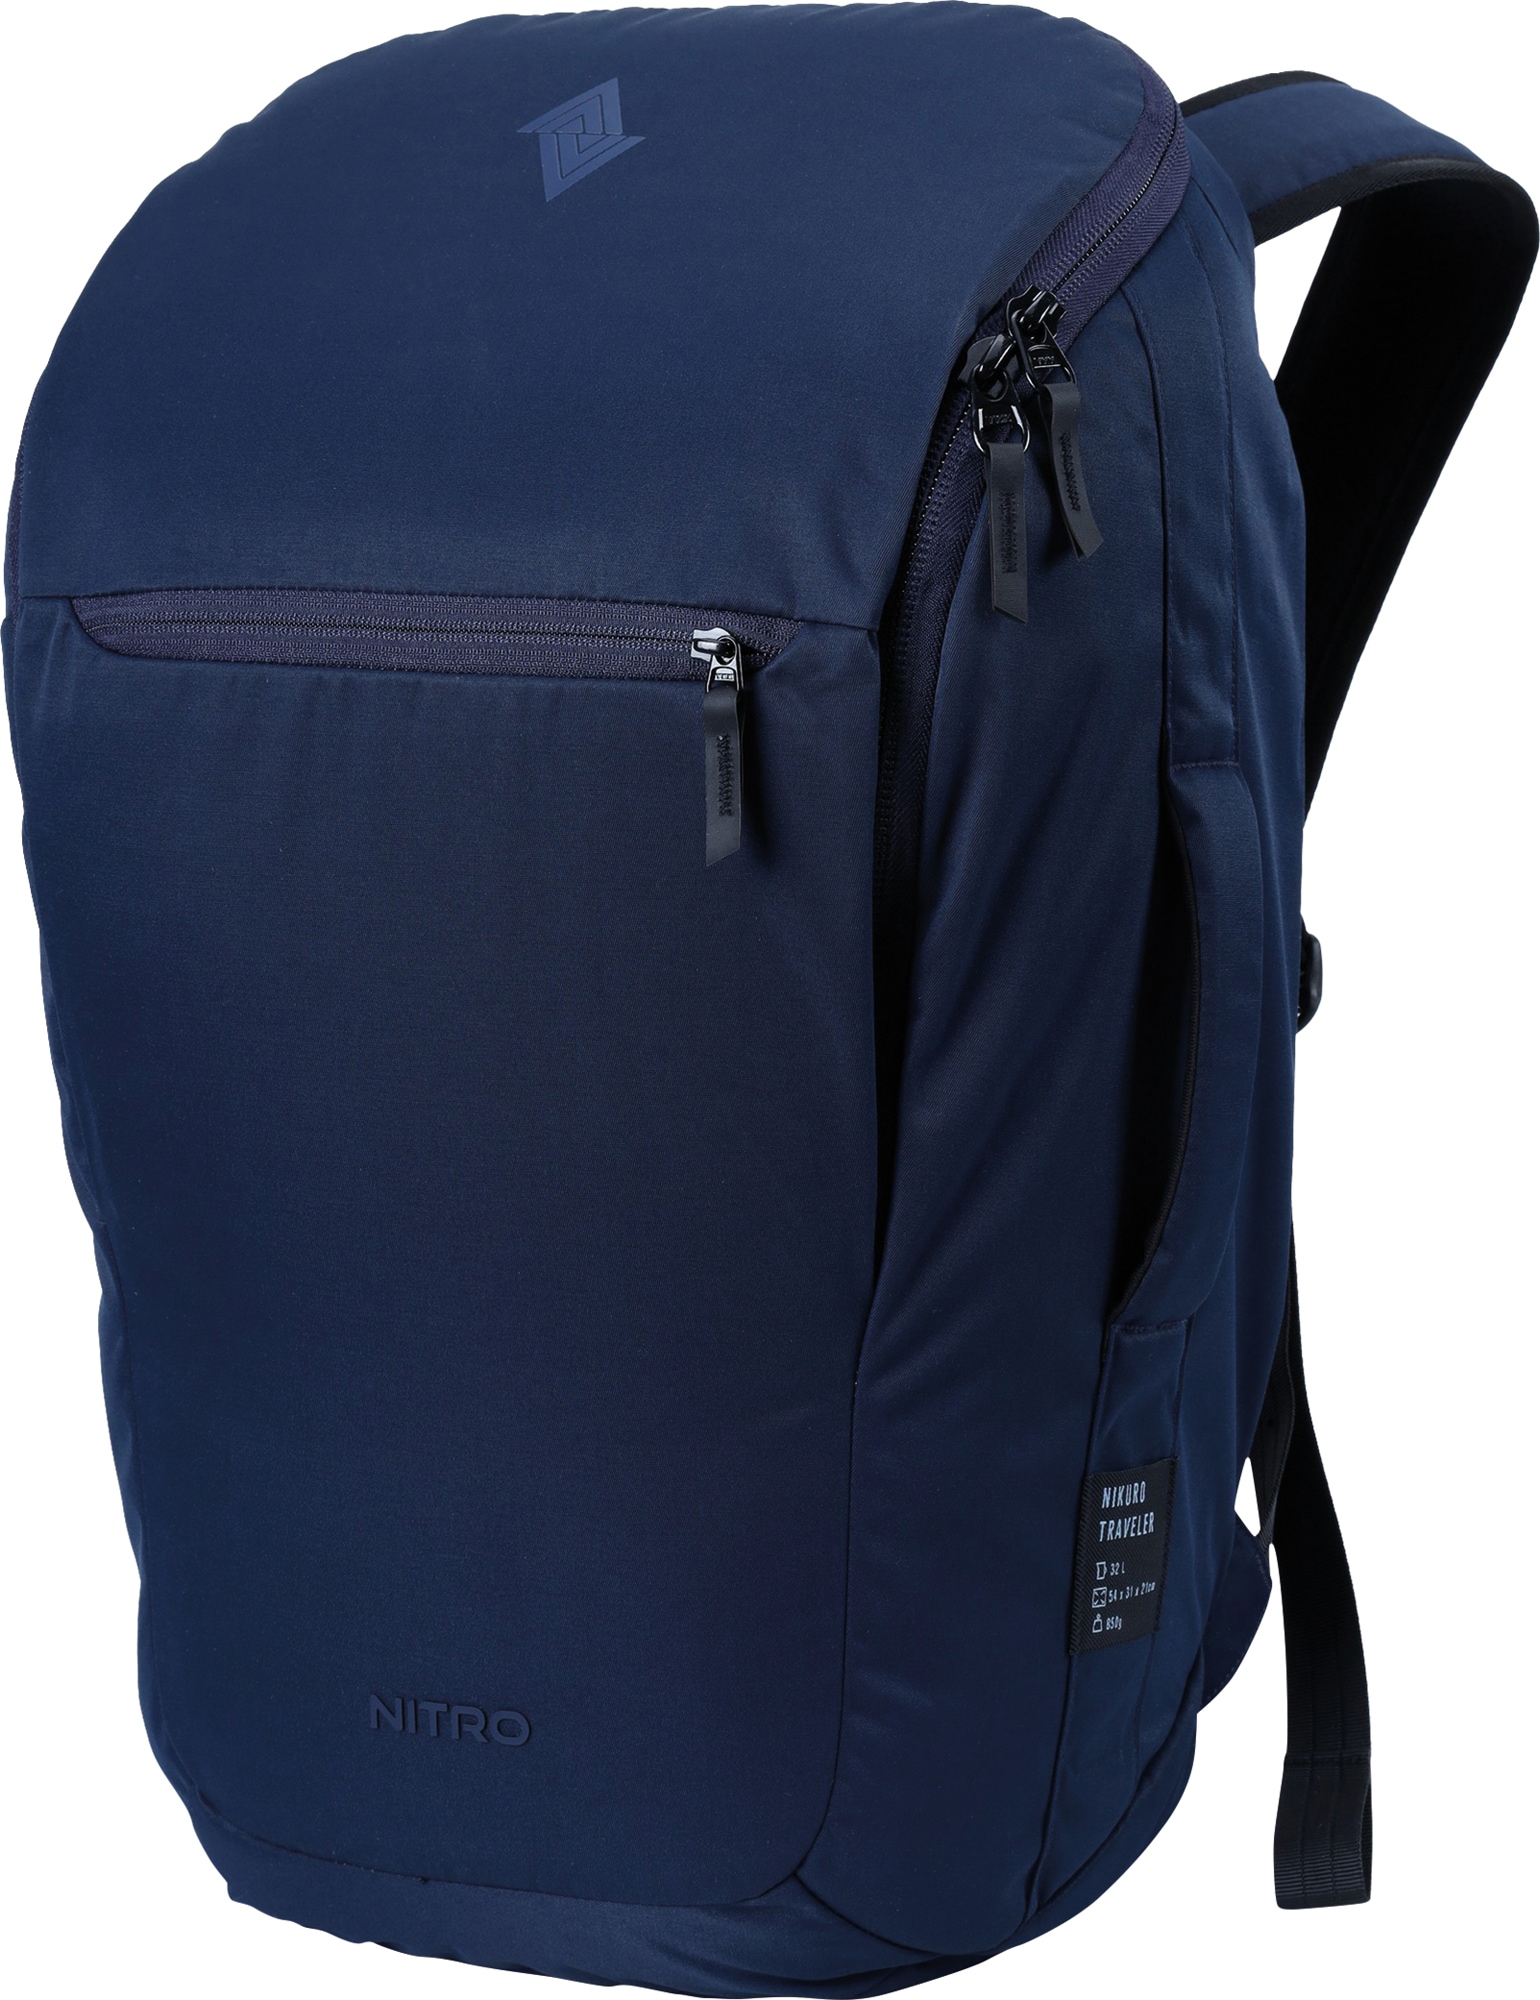 Freizeitrucksack »Nikuro Traveller«, Reisetasche, Travel Bag, Alltagsrucksack, Daypack